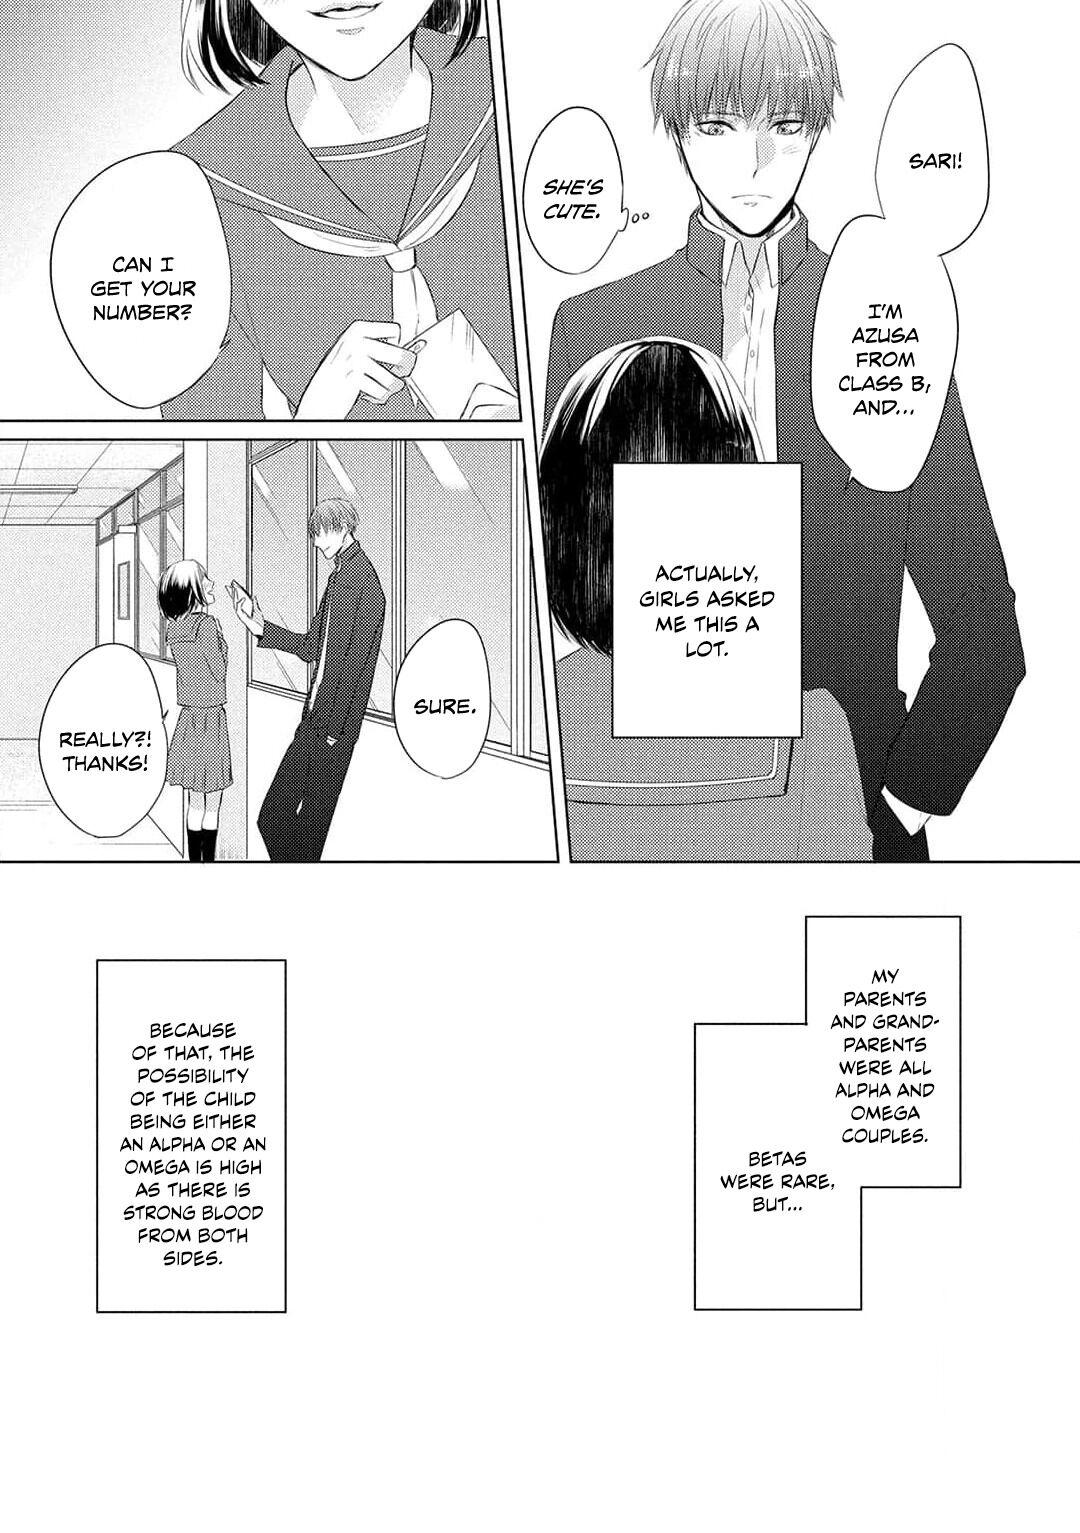 Katsuyoku Scandal Vol 1 Ch 1 Page 14 Mangago